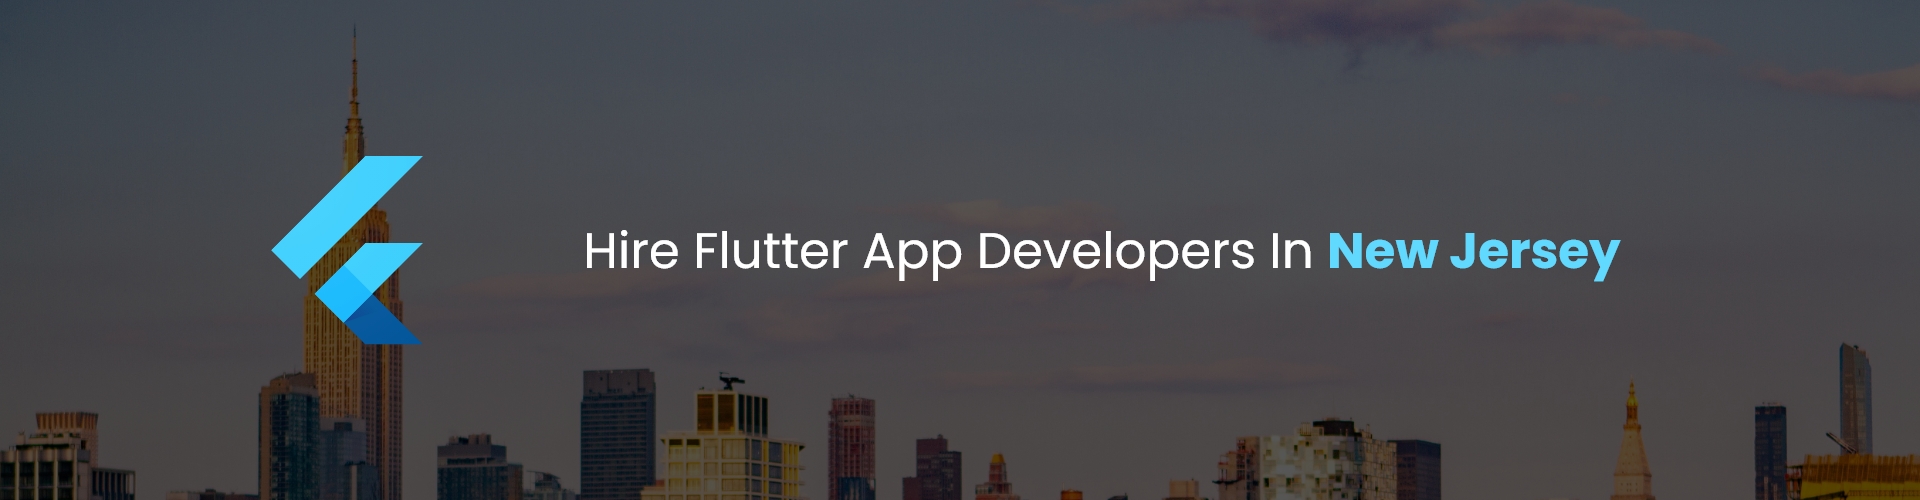 hire flutter app developers in new jersey